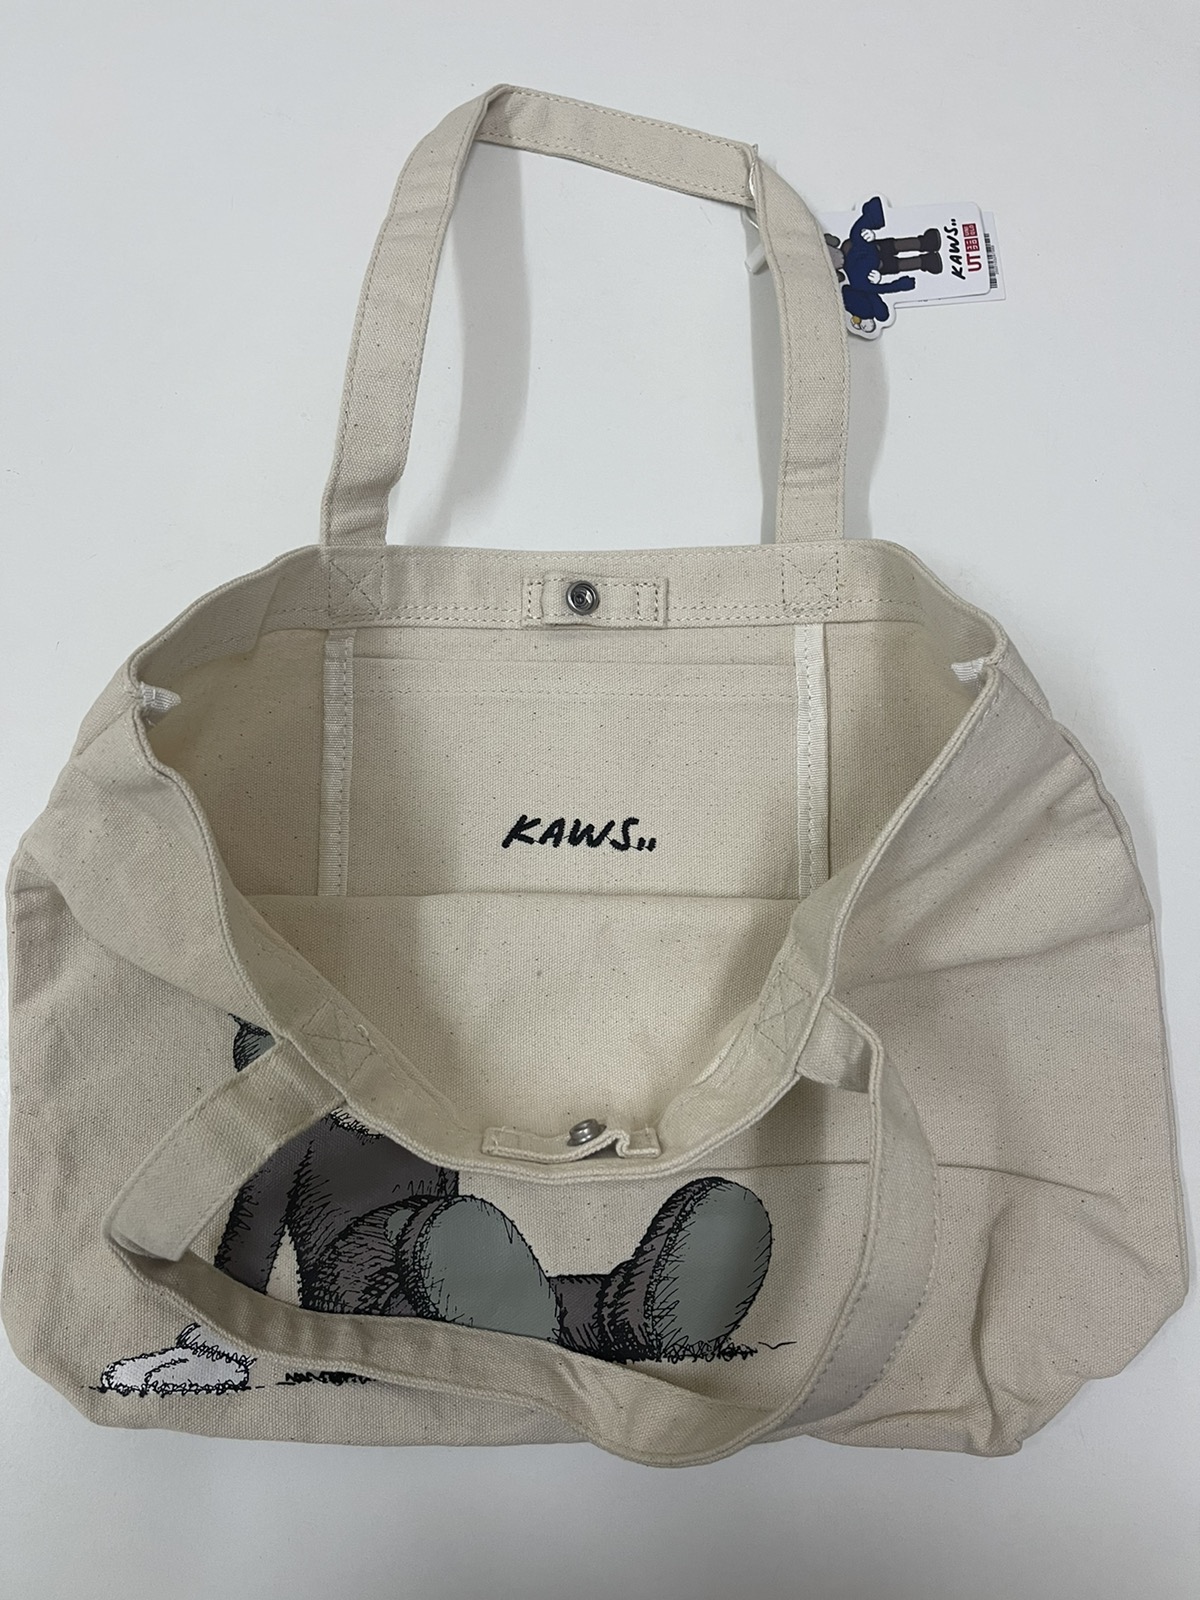 Vintage - Kaws Tote Bag Limited Edition / Uniqlo / Evangelion / Rare - 7